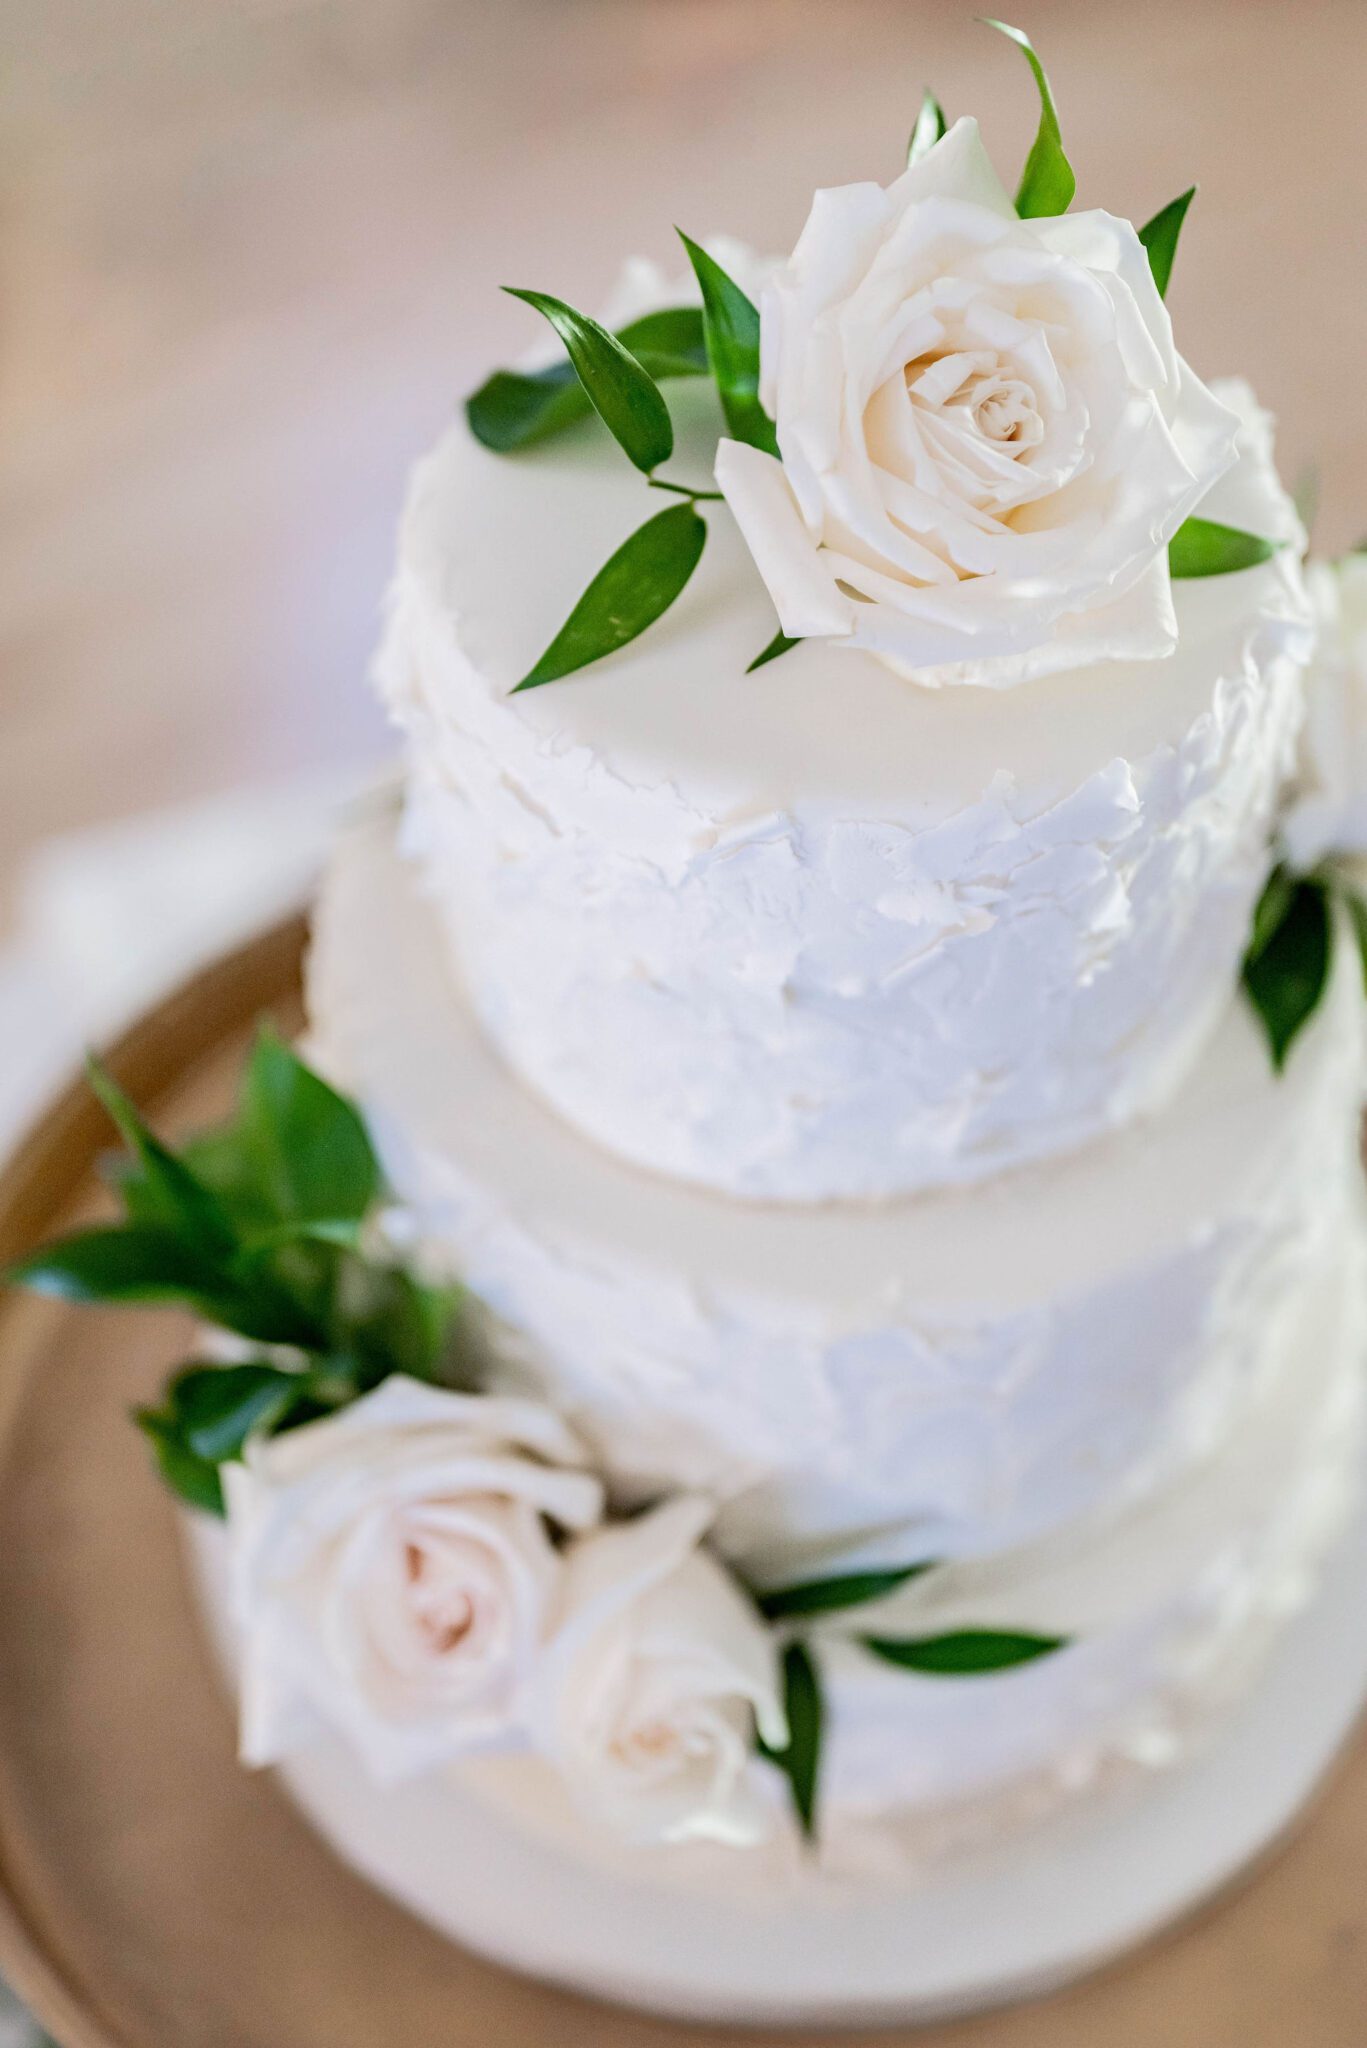 Elegant white wedding cake with added roses and greenery, classic wedding style inspiration. 